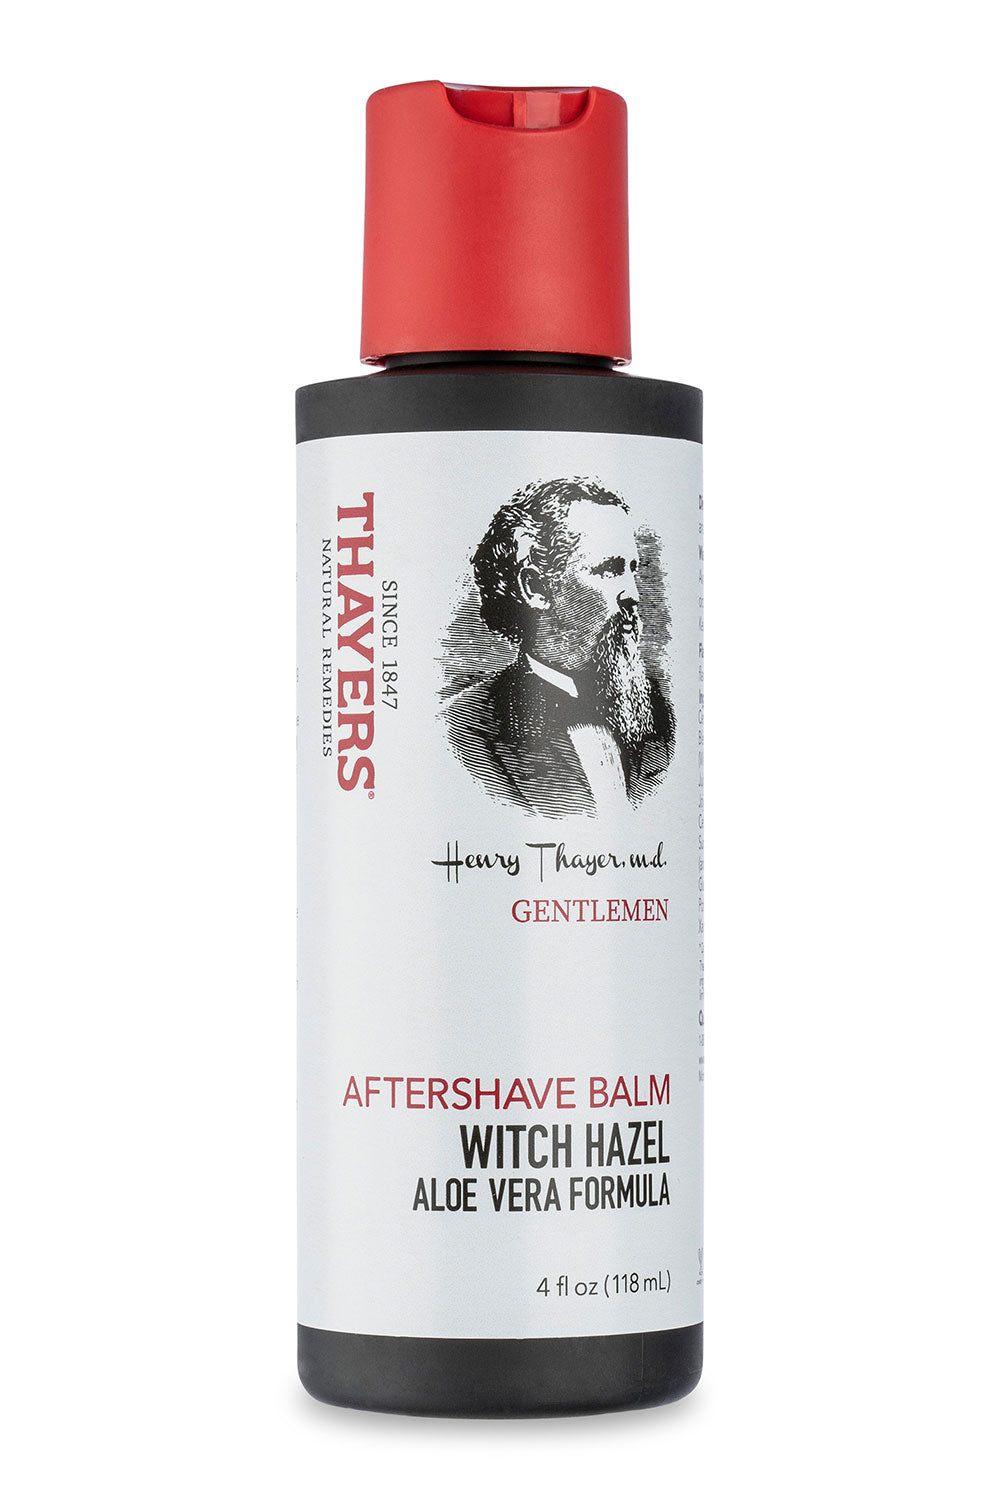 Thayers Witch Hazel- Gentlemen's Aftershave Balm